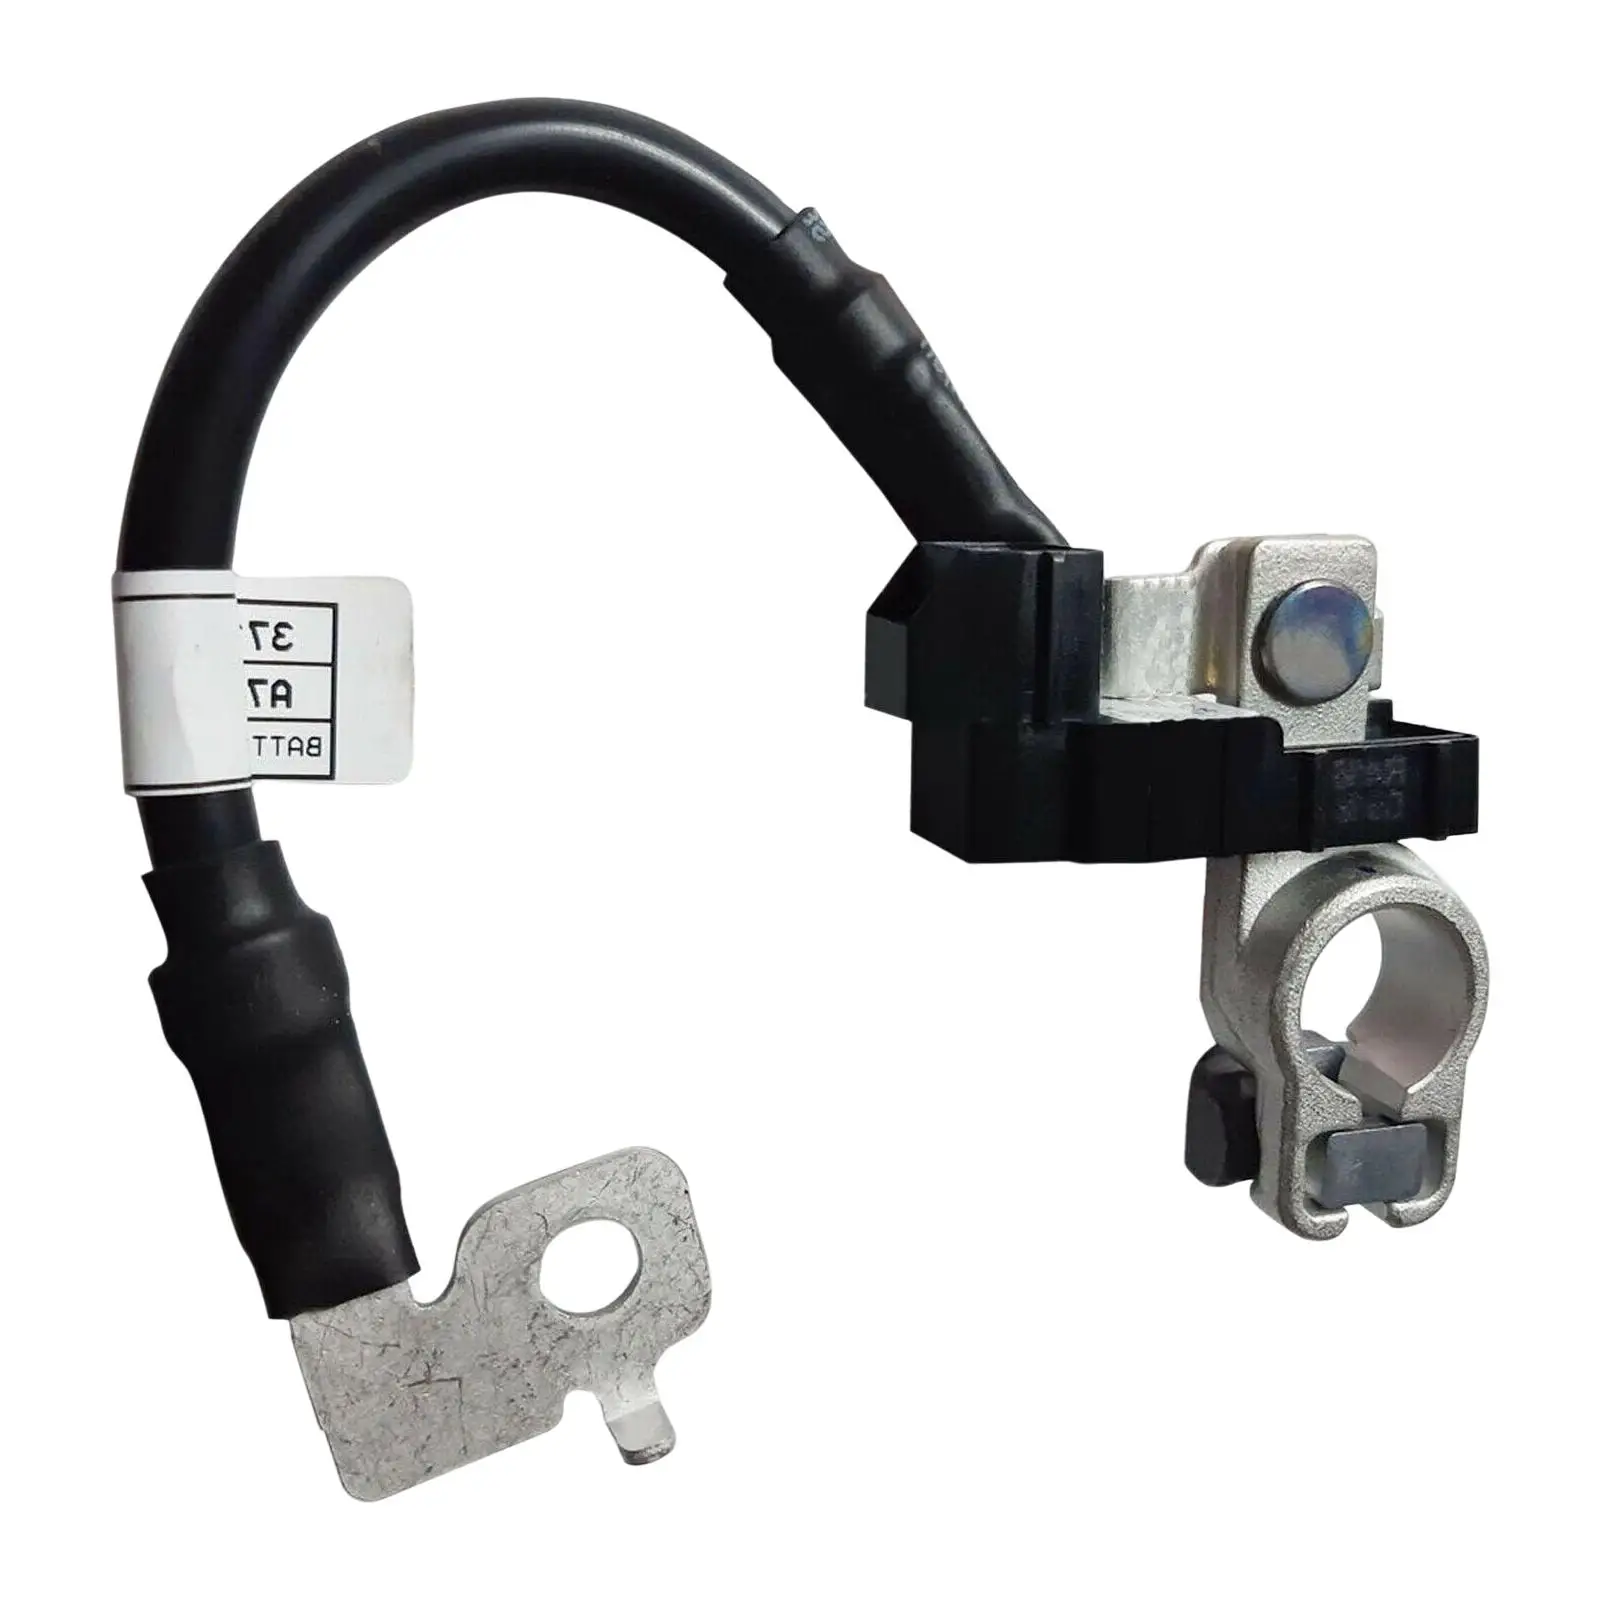 37180A7000 Car Battery Cable Negative Sensor for Kia Automobile Accessory Easy to Install